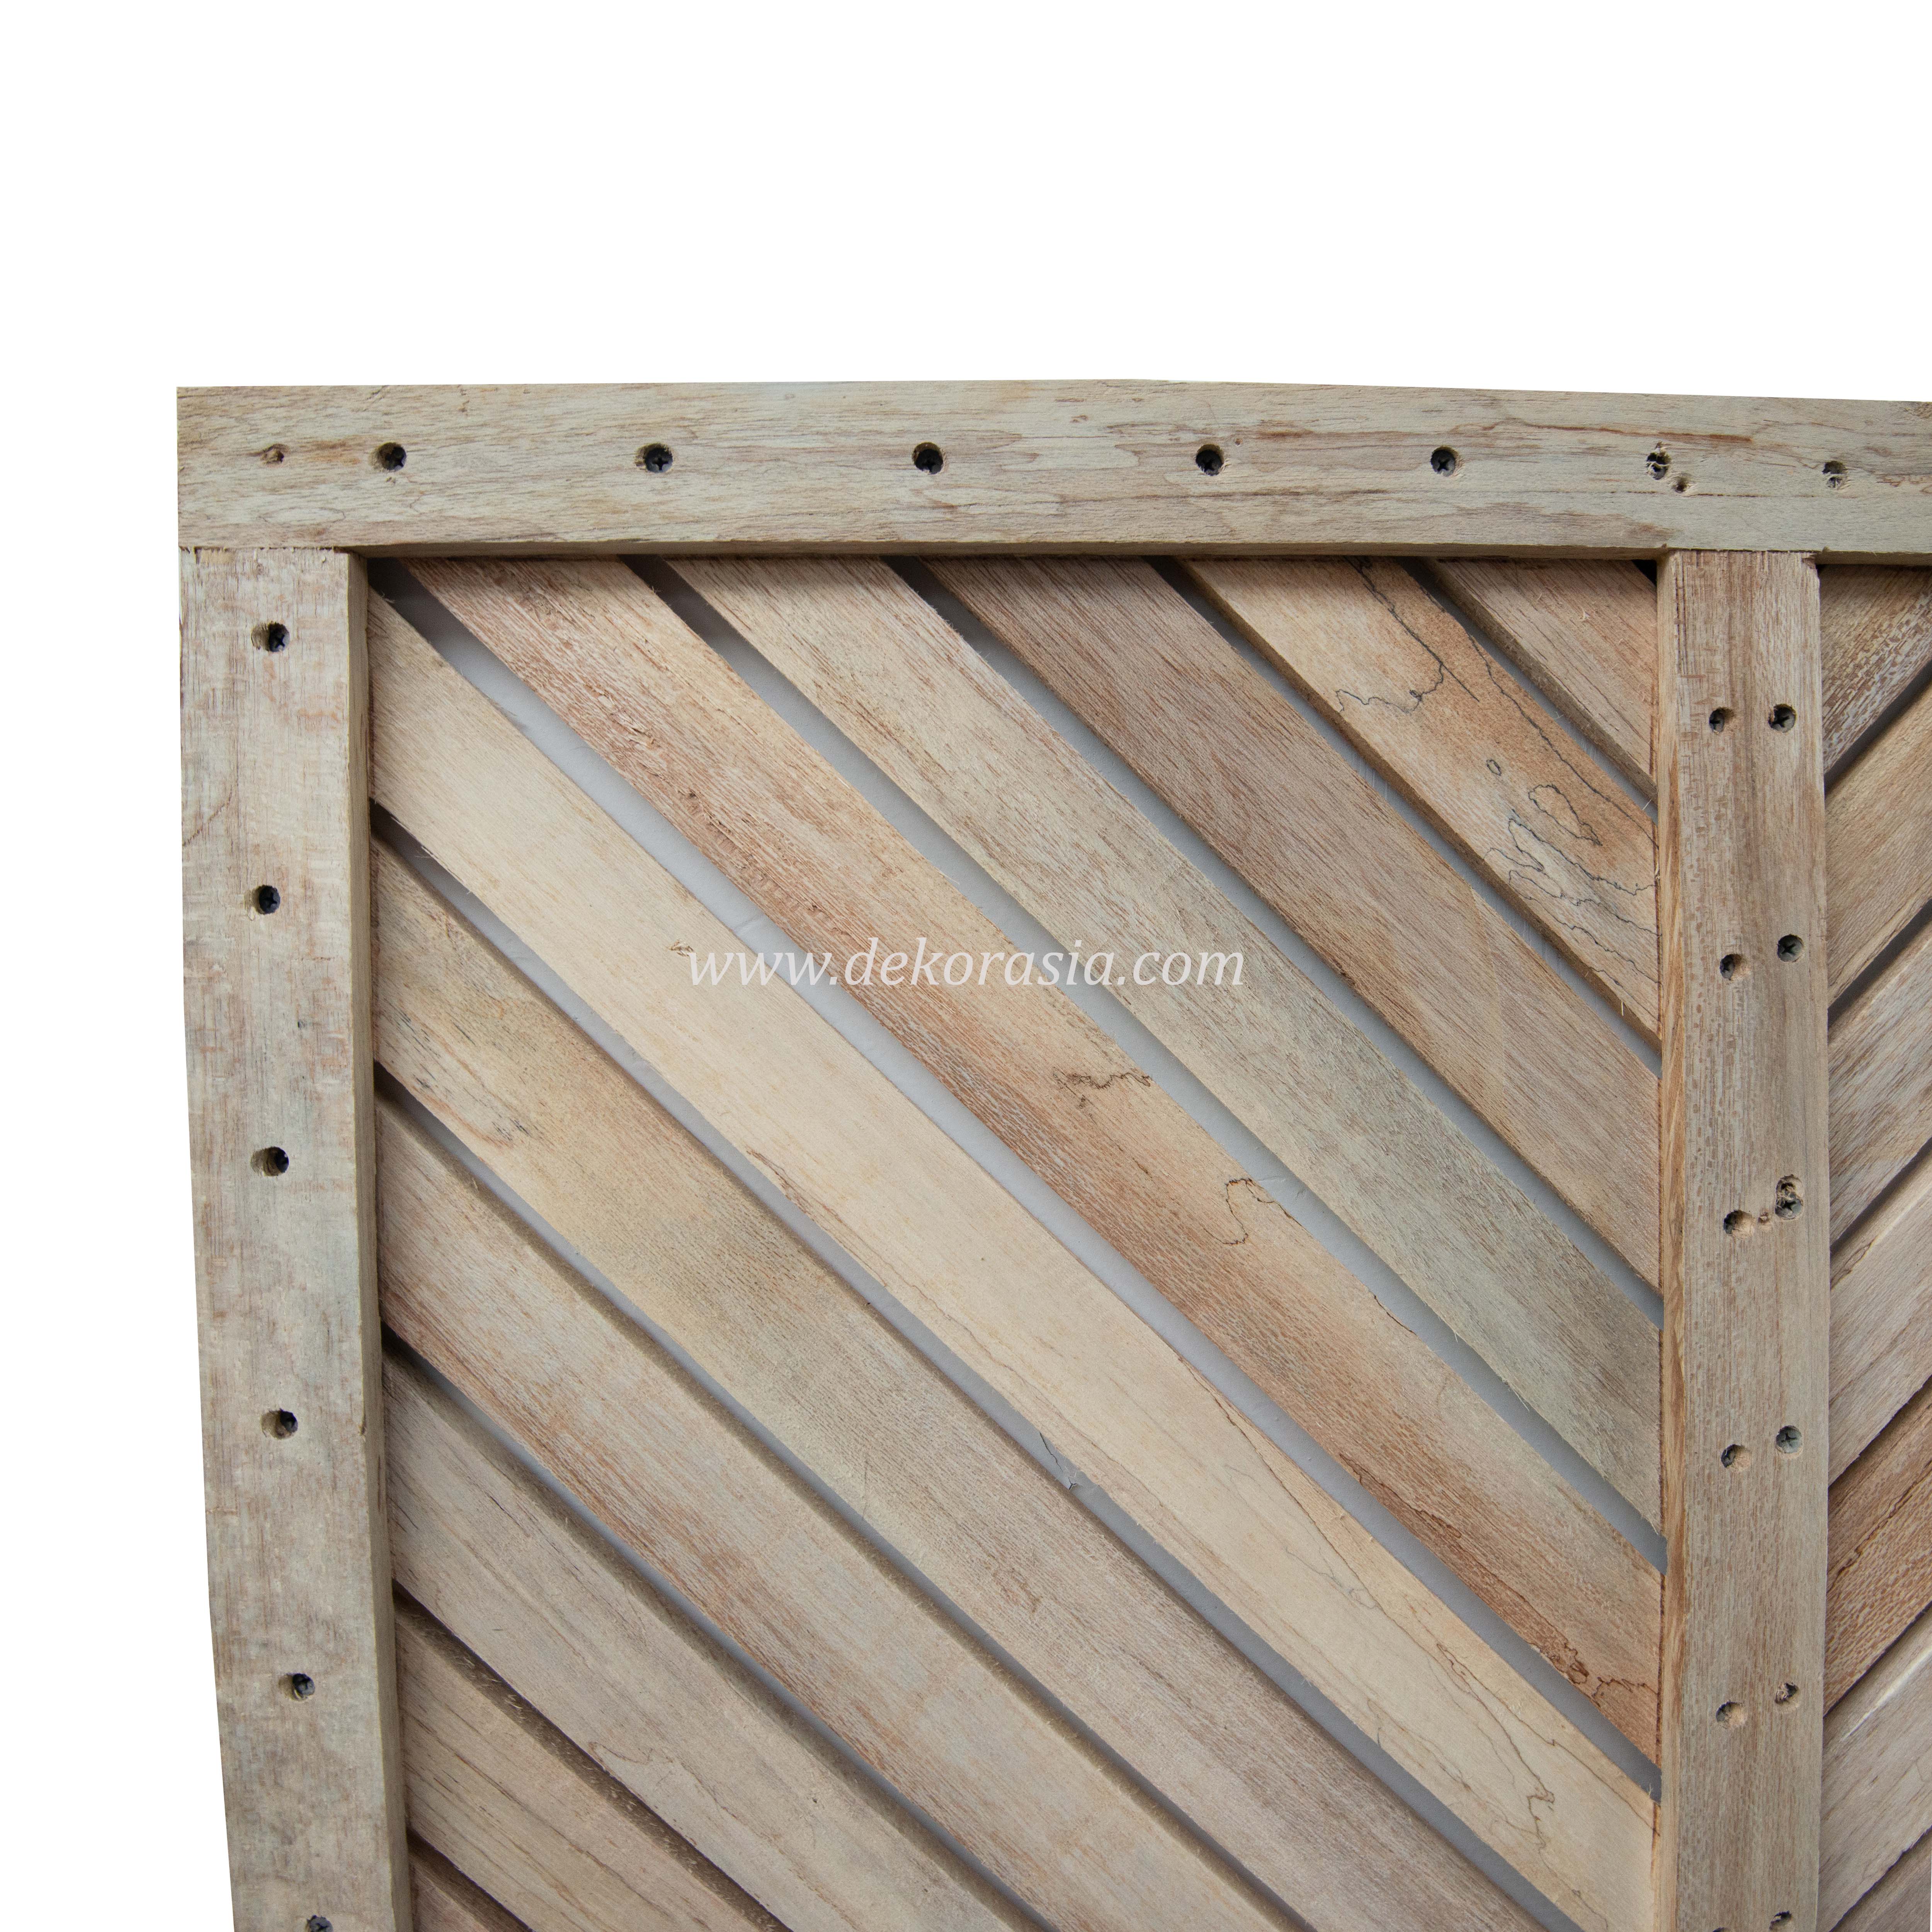 Wood Screen Kruing, Wood Panels Variation Pattern (Dipterocarpus kunstleri) - V Pattern Design Wood Fence